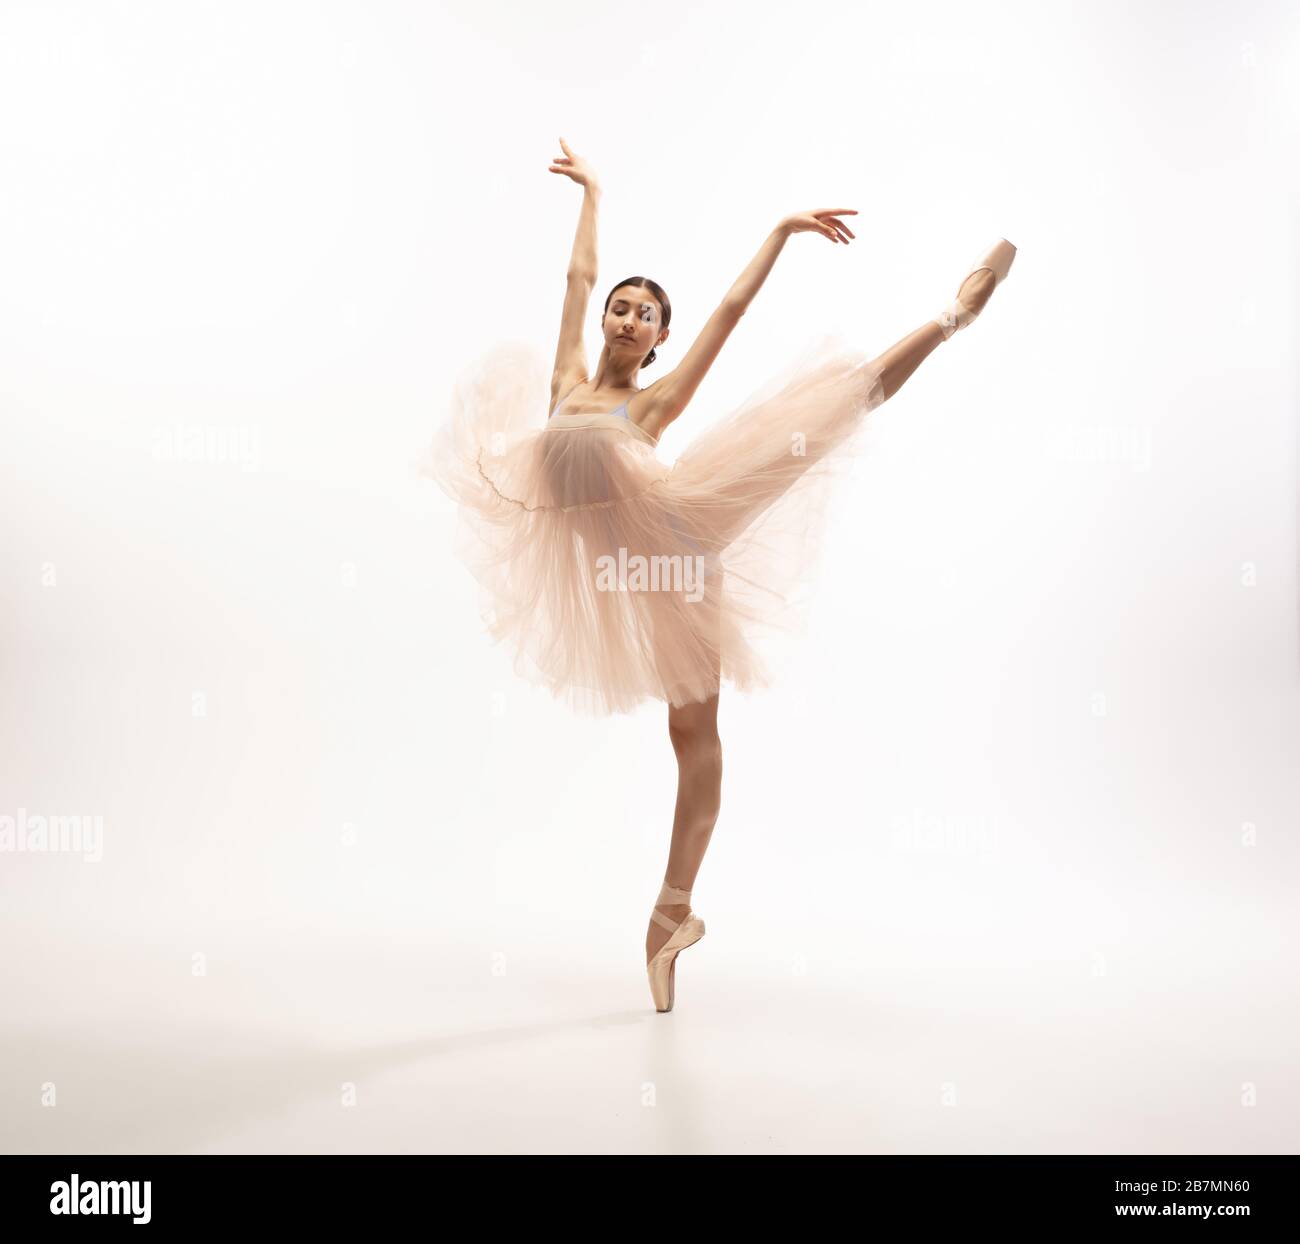 Classical Ballet & Opera House | LinkedIn